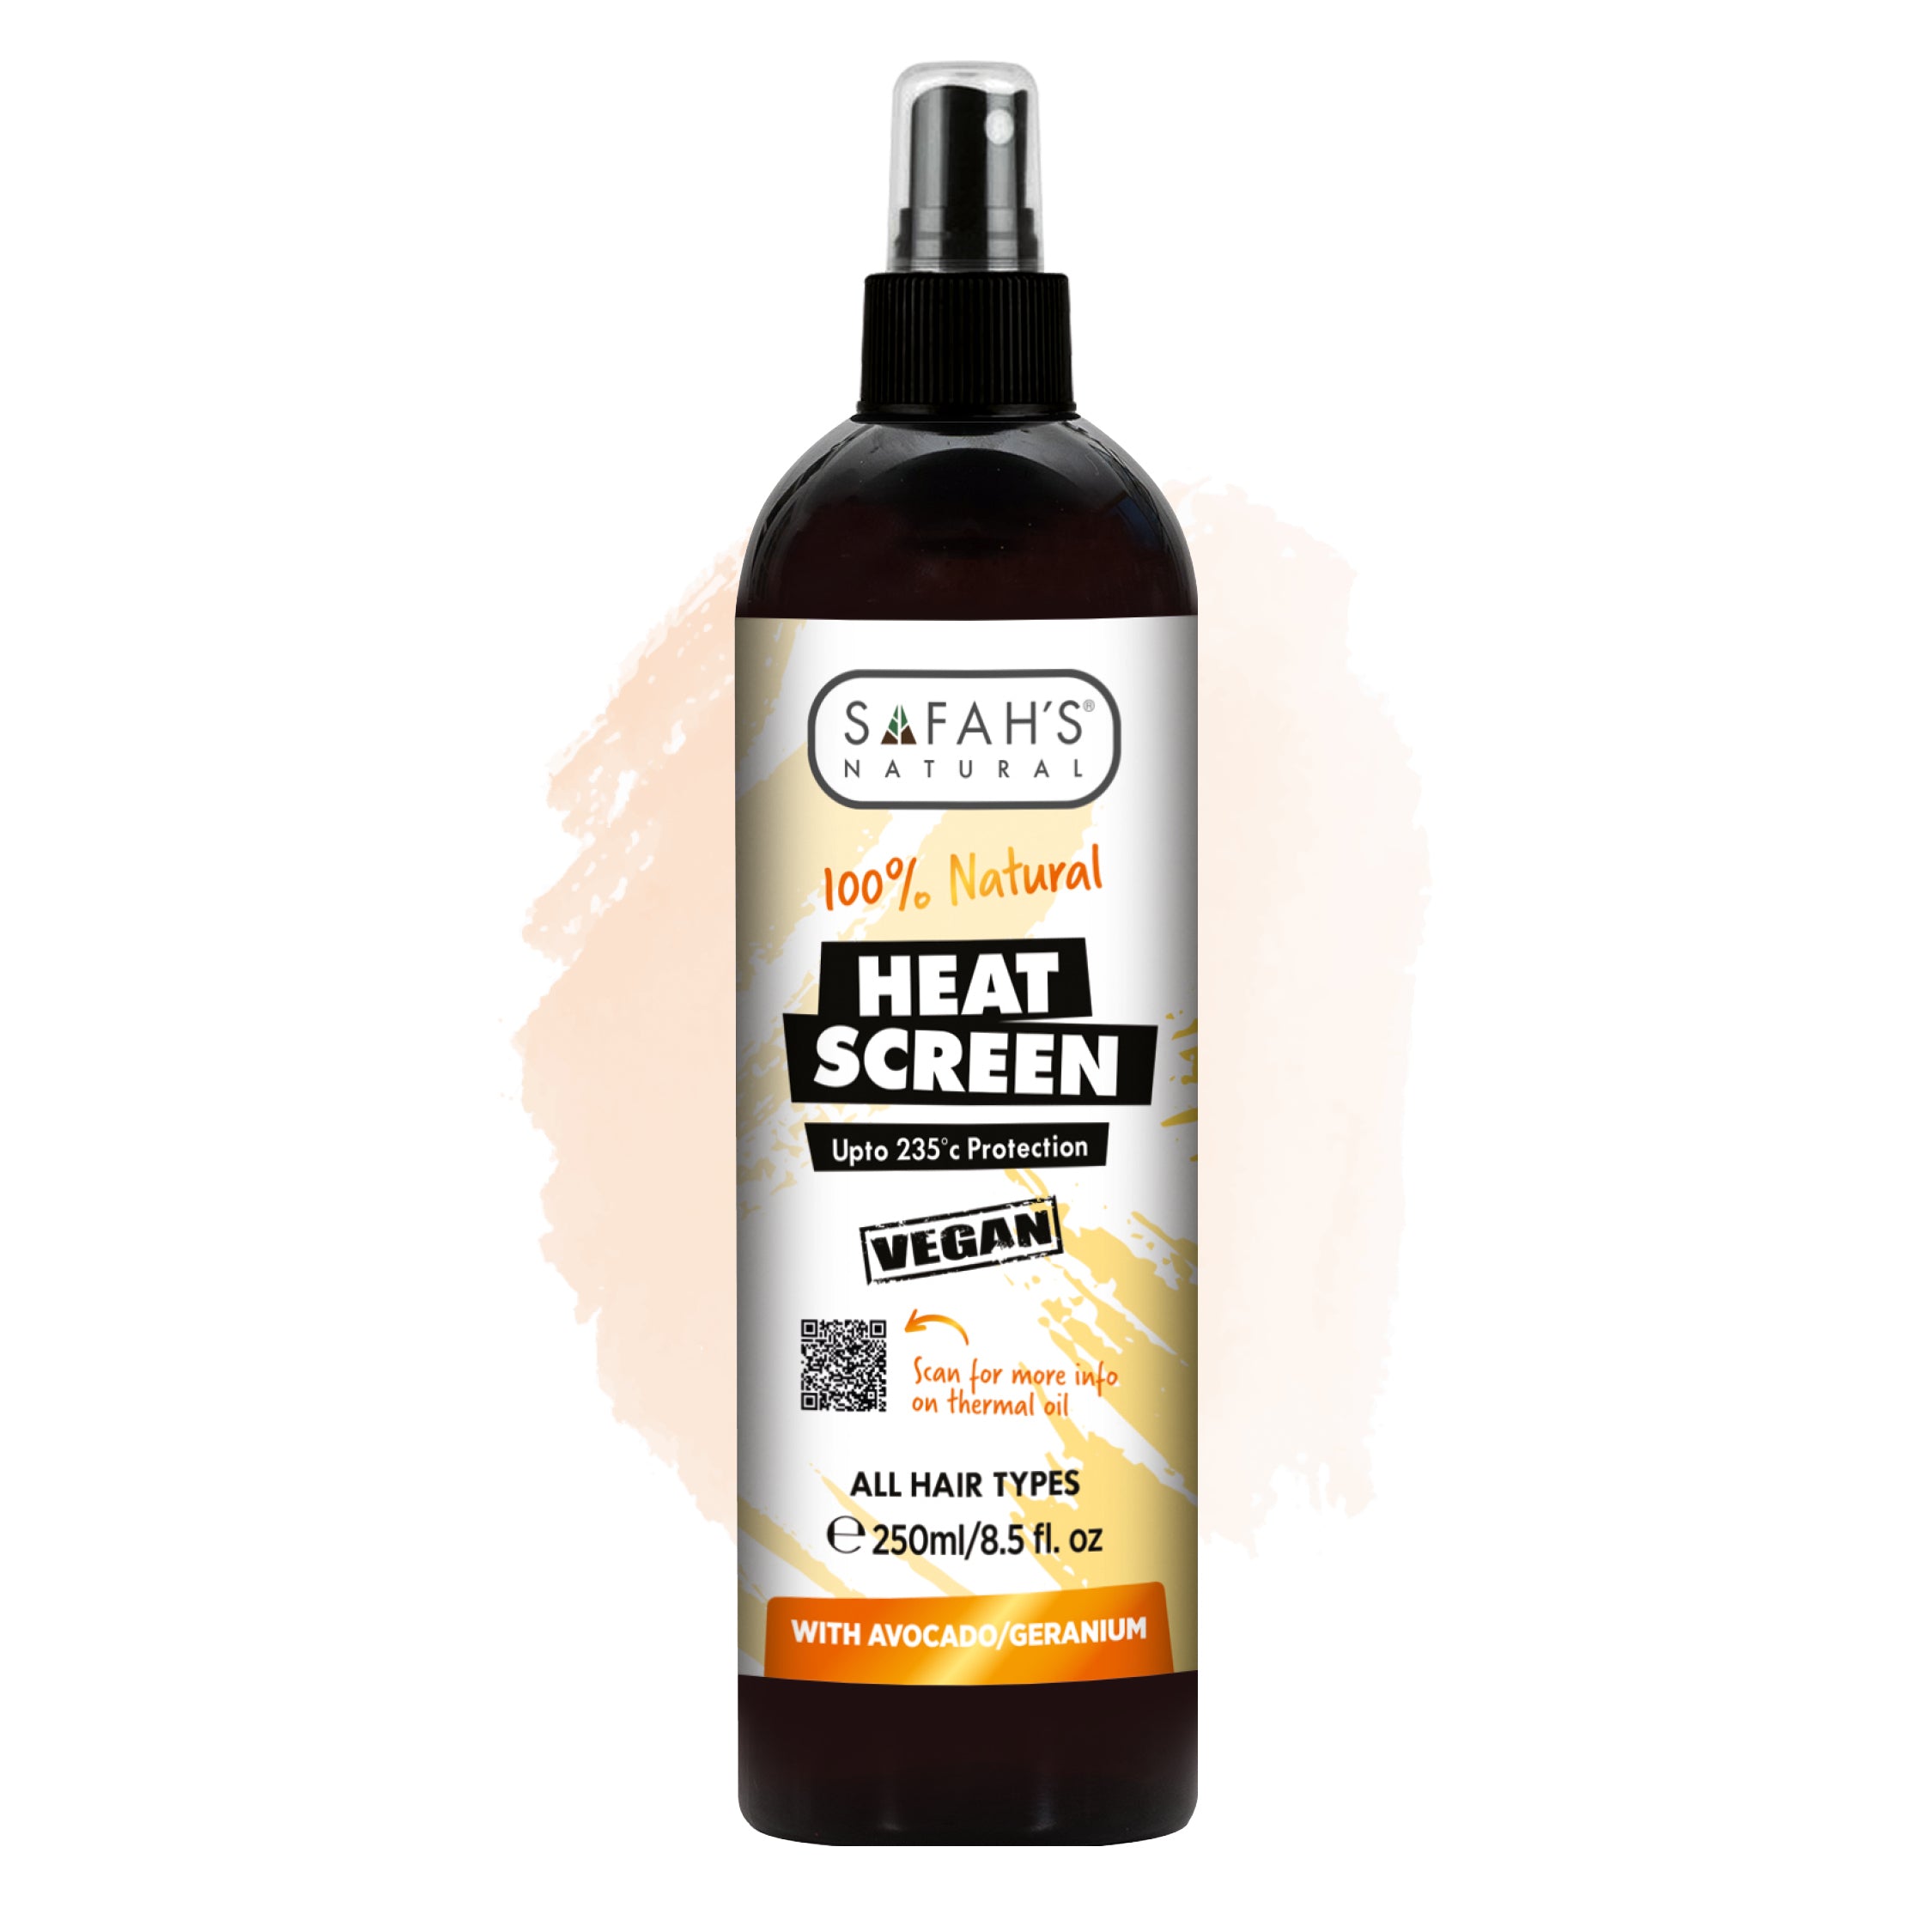 Heat Screen Heat Protector Spray - Avocado & Geranium Formula for All Hair Types